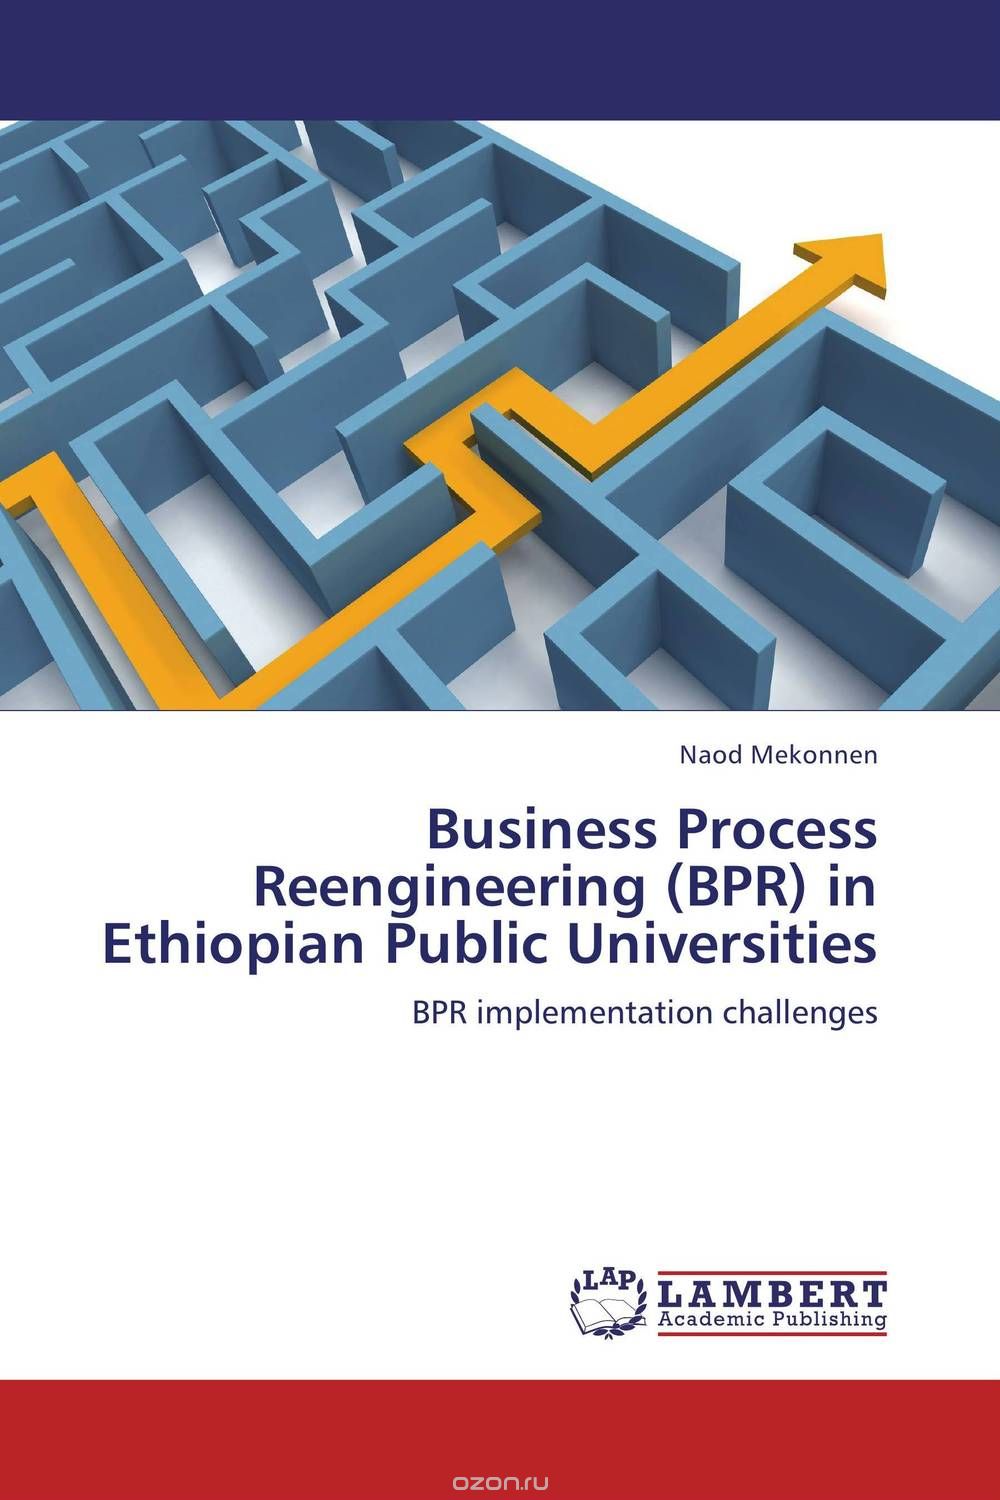 Скачать книгу "Business Process Reengineering (BPR) in Ethiopian Public Universities"